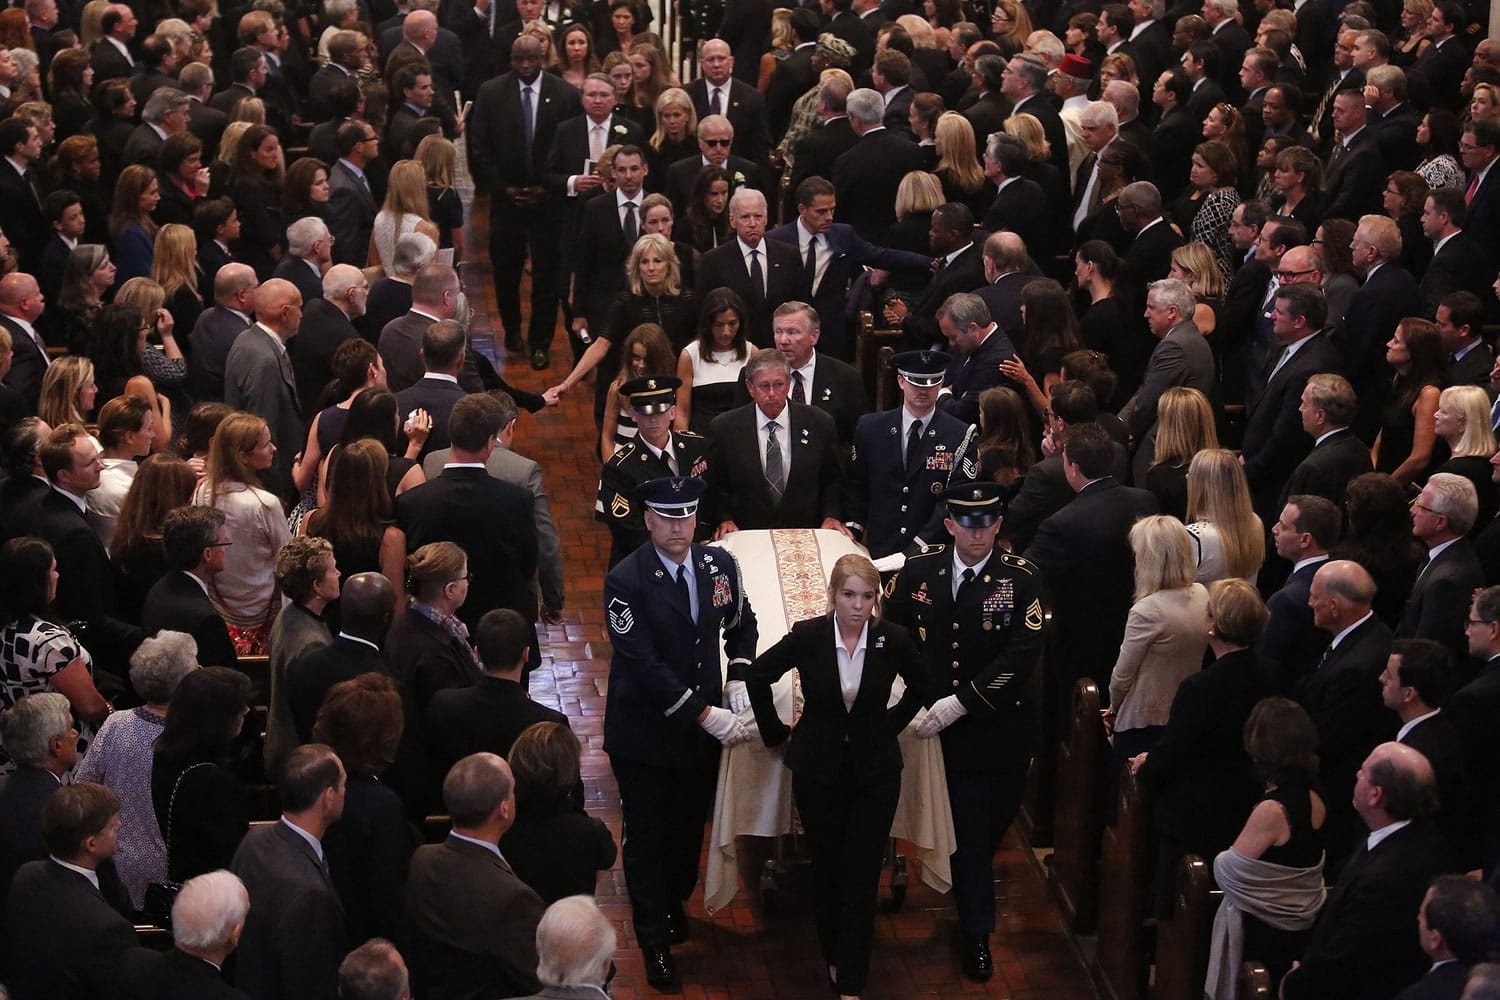 Vice President Joe Biden, his wife Jill Biden, and family members follow the casket Saturday during funeral services Biden's son, Beau Biden, at St.